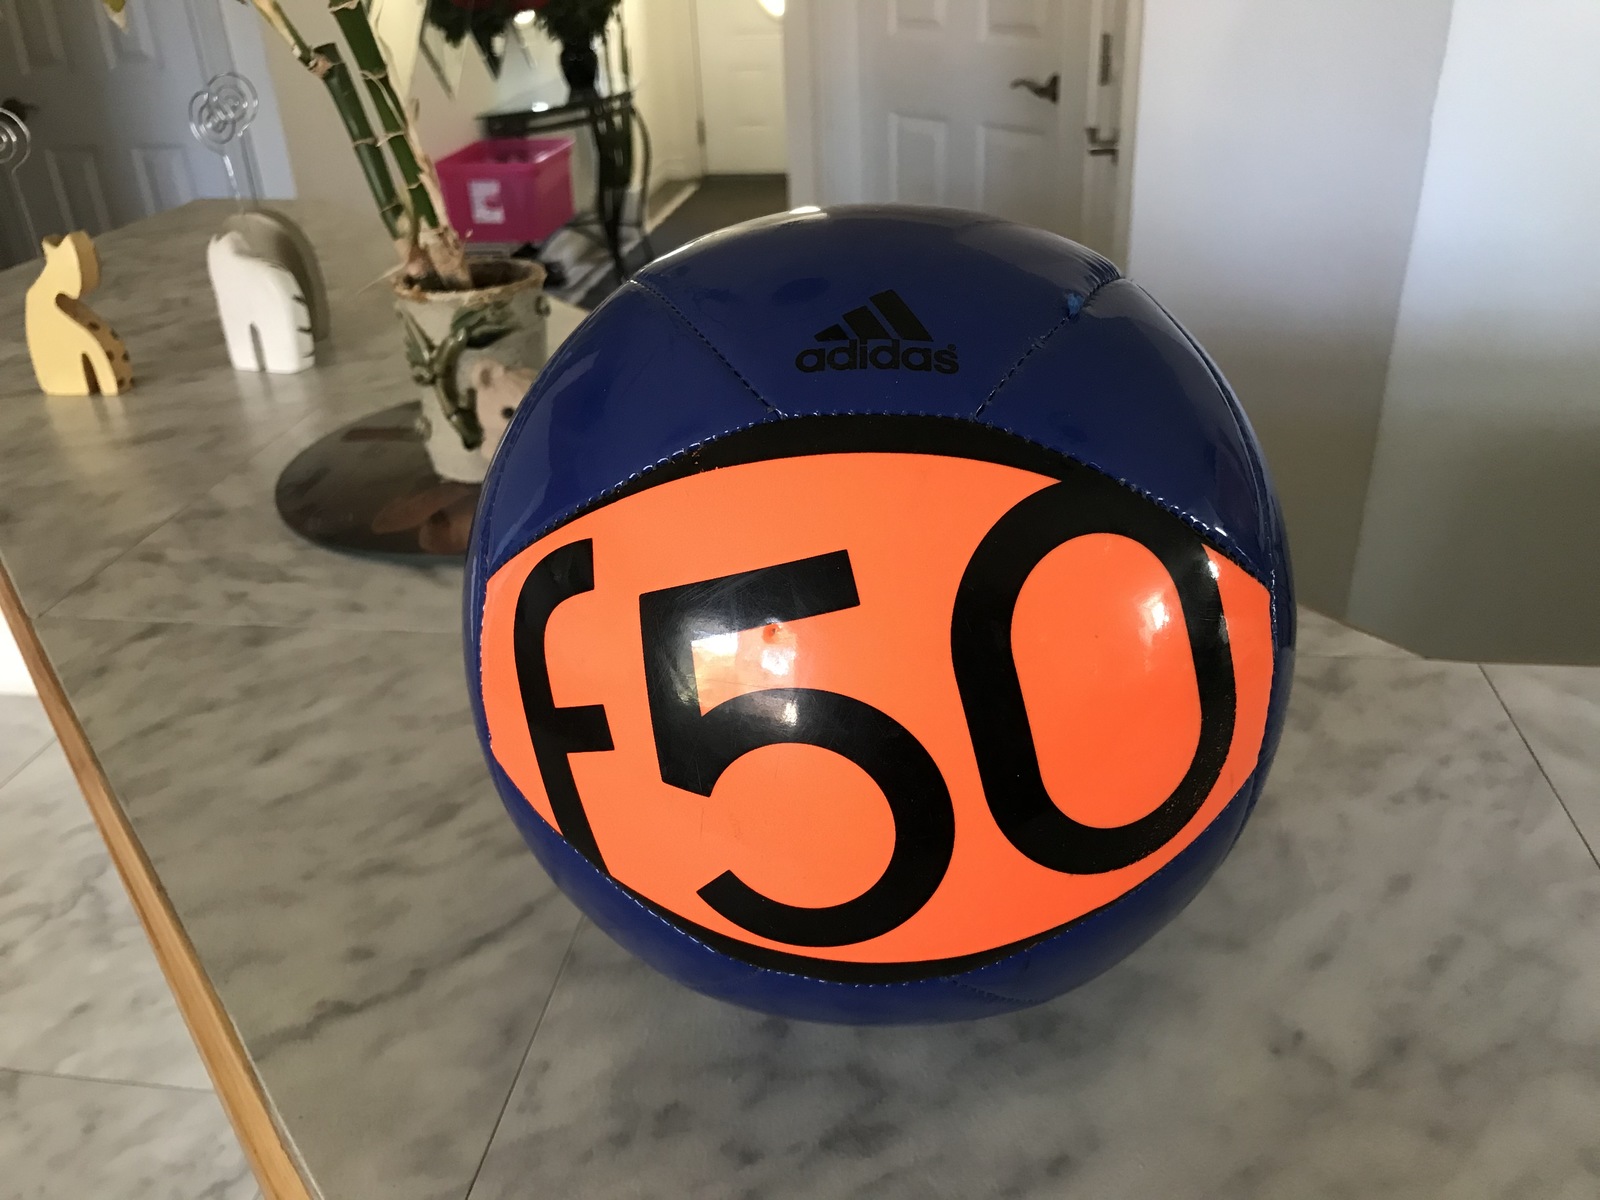 F50 Adidas Soccer Ball Size 5  - $20.65